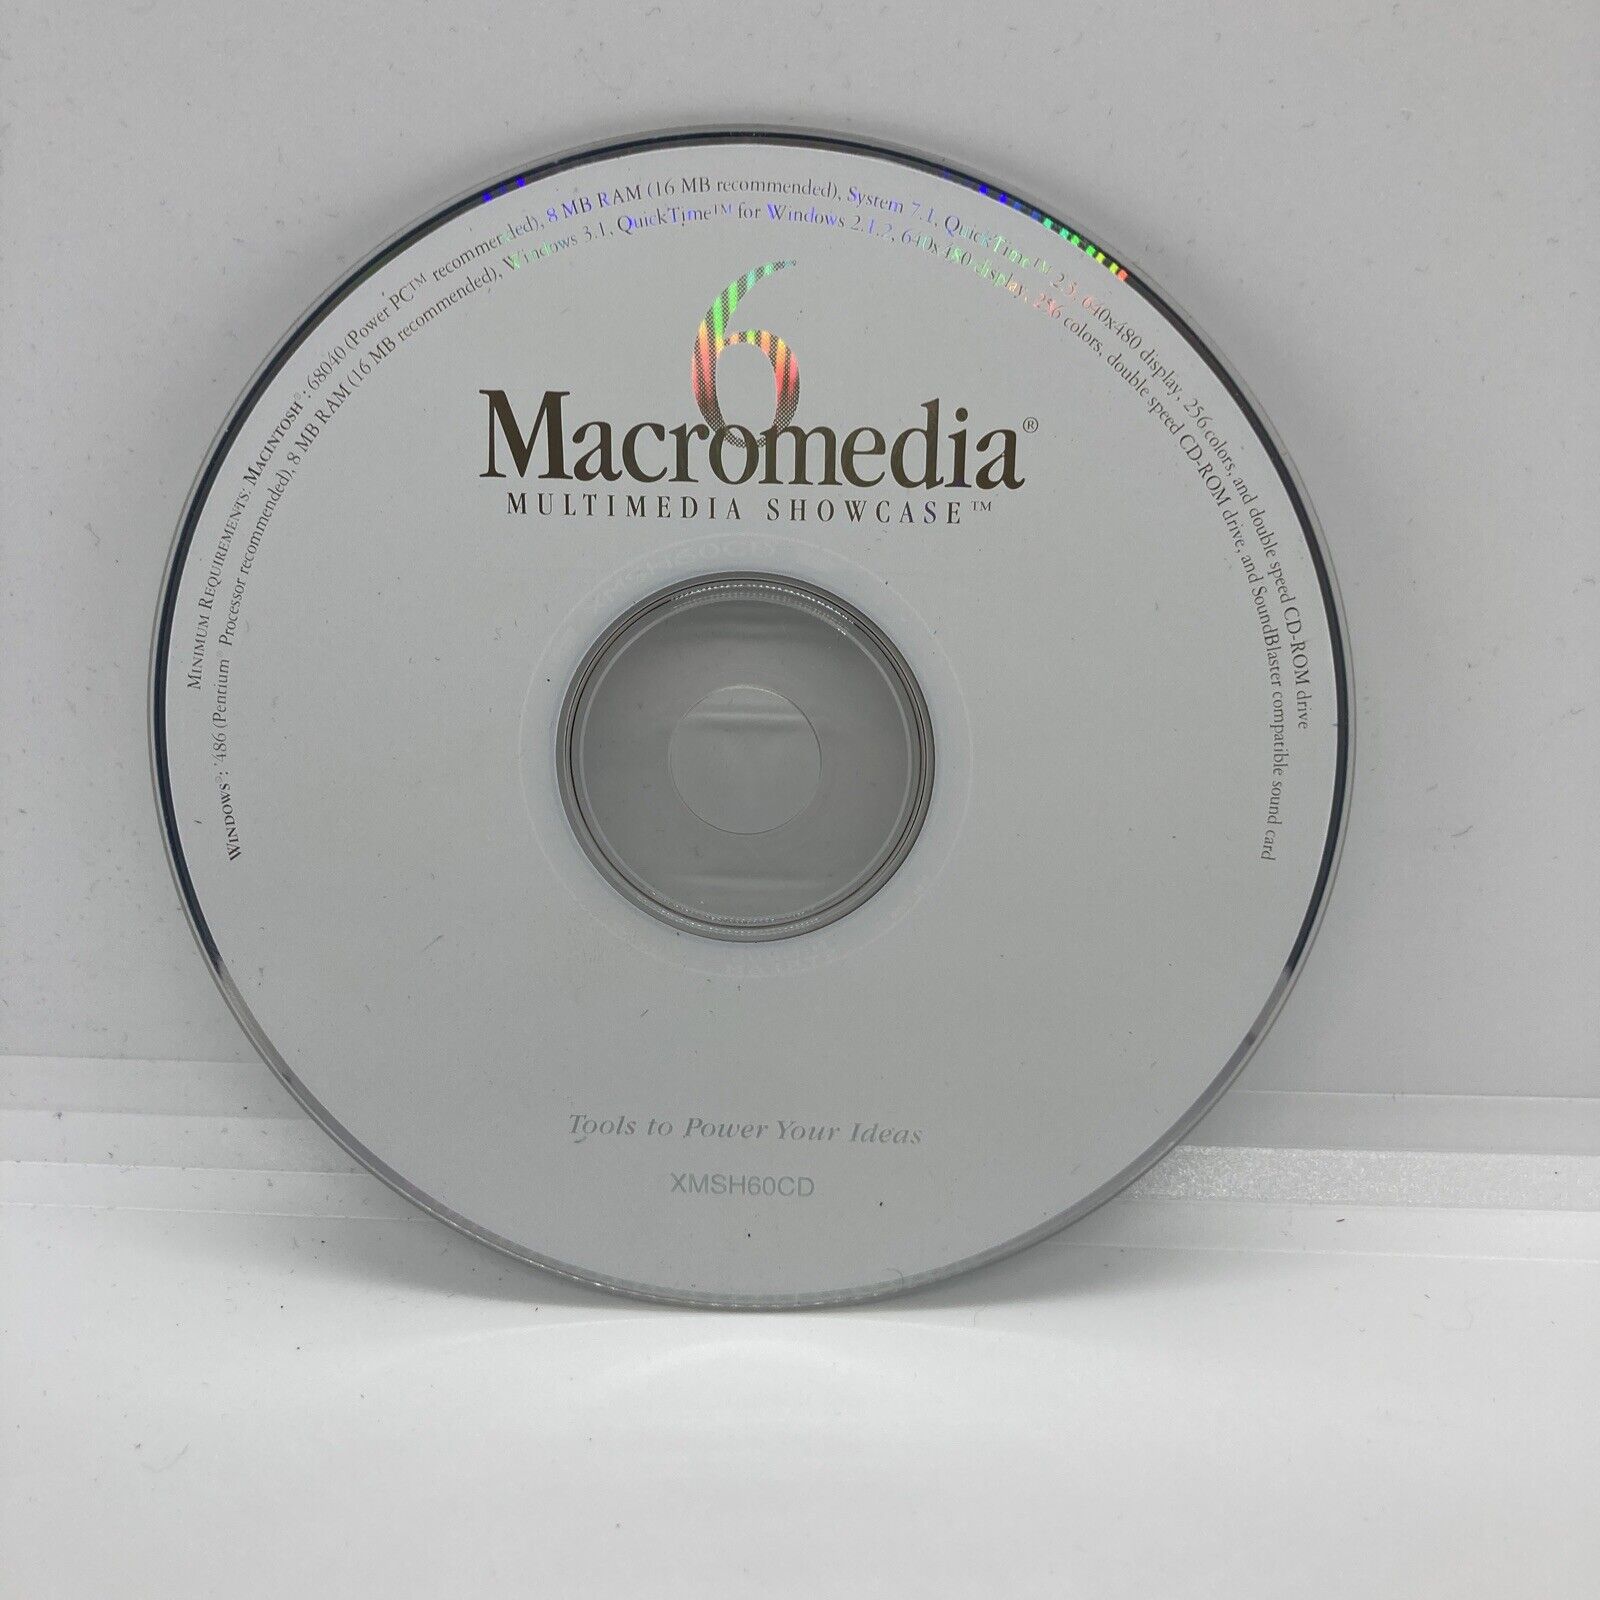 Vintage software - MACROMEDIA Multimedia Showcase 6 CD